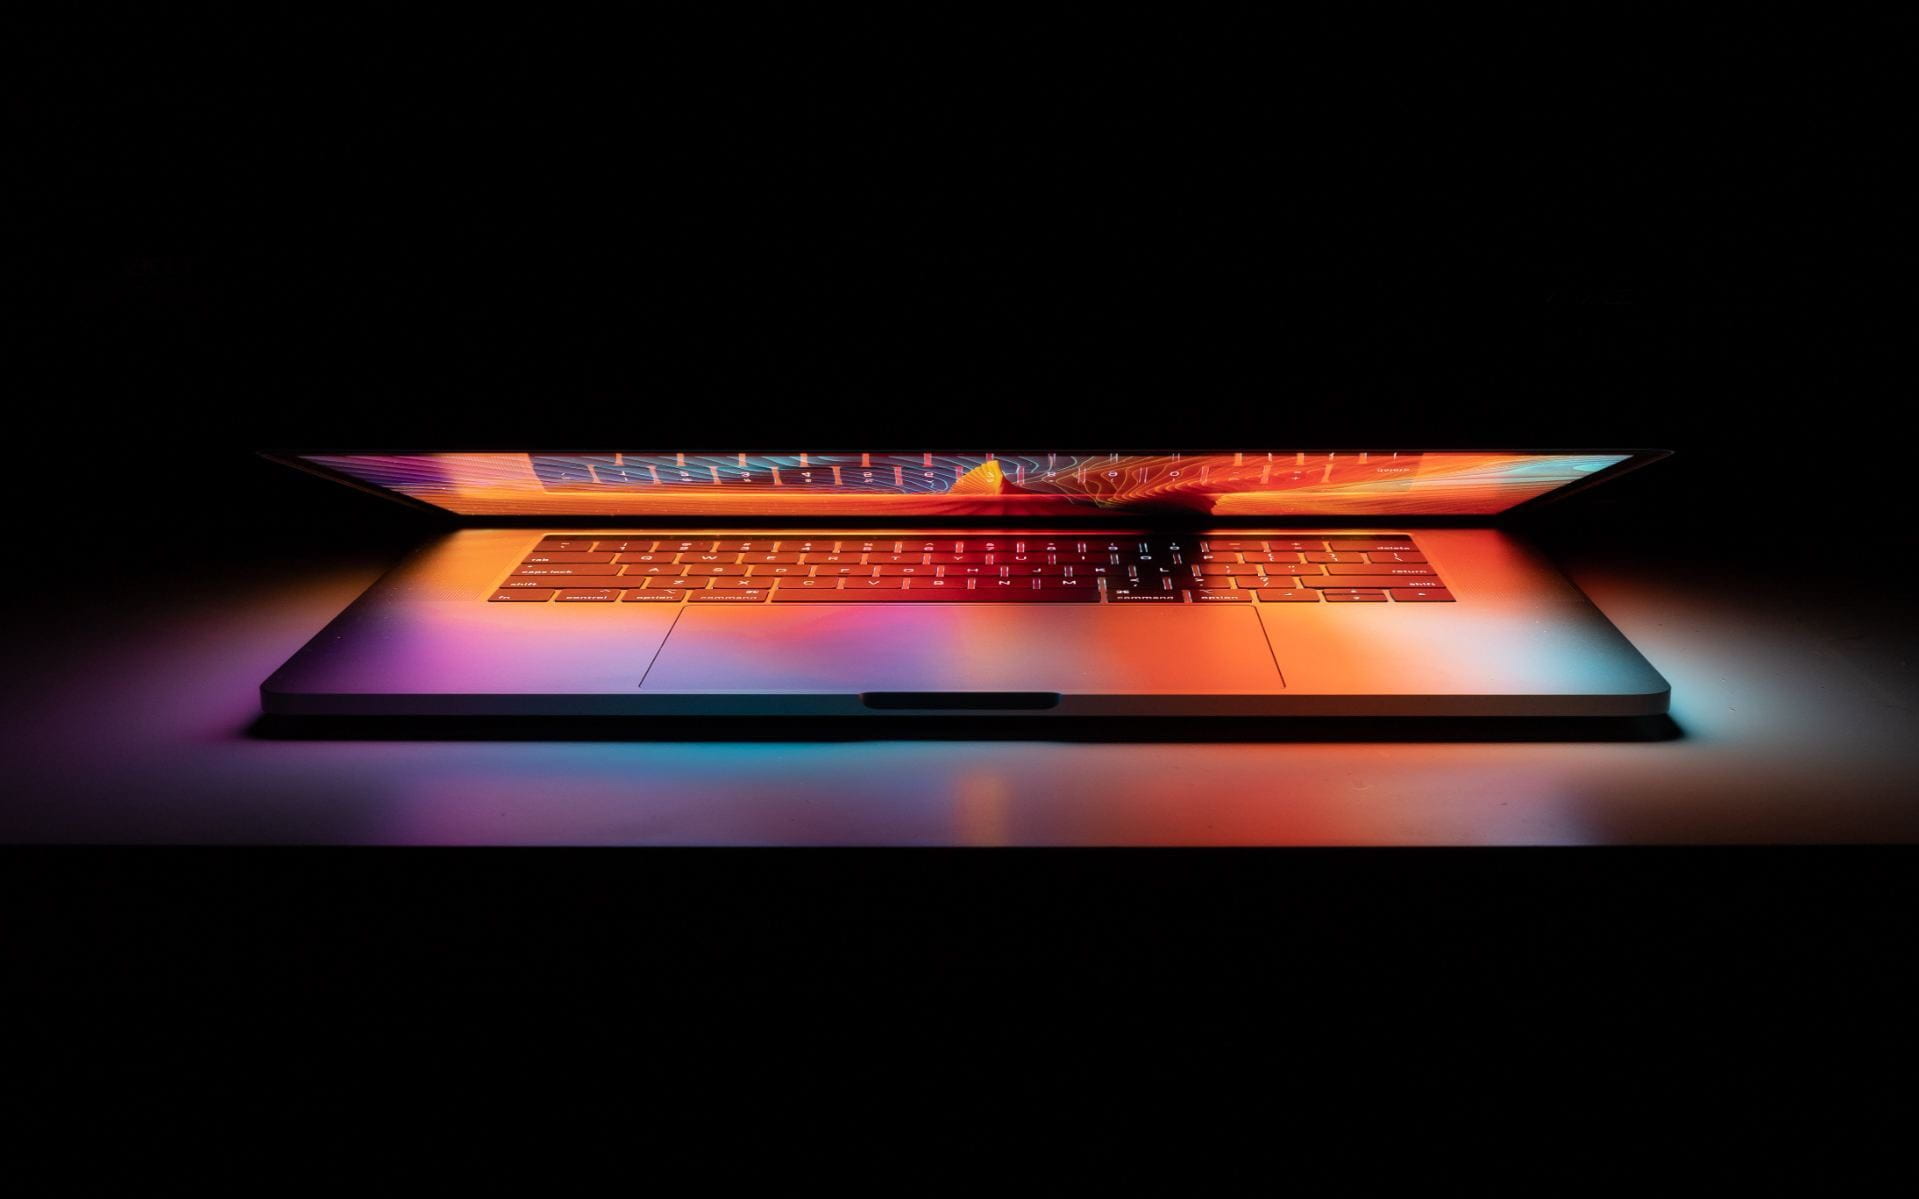 slightly open laptop emitting colorful light